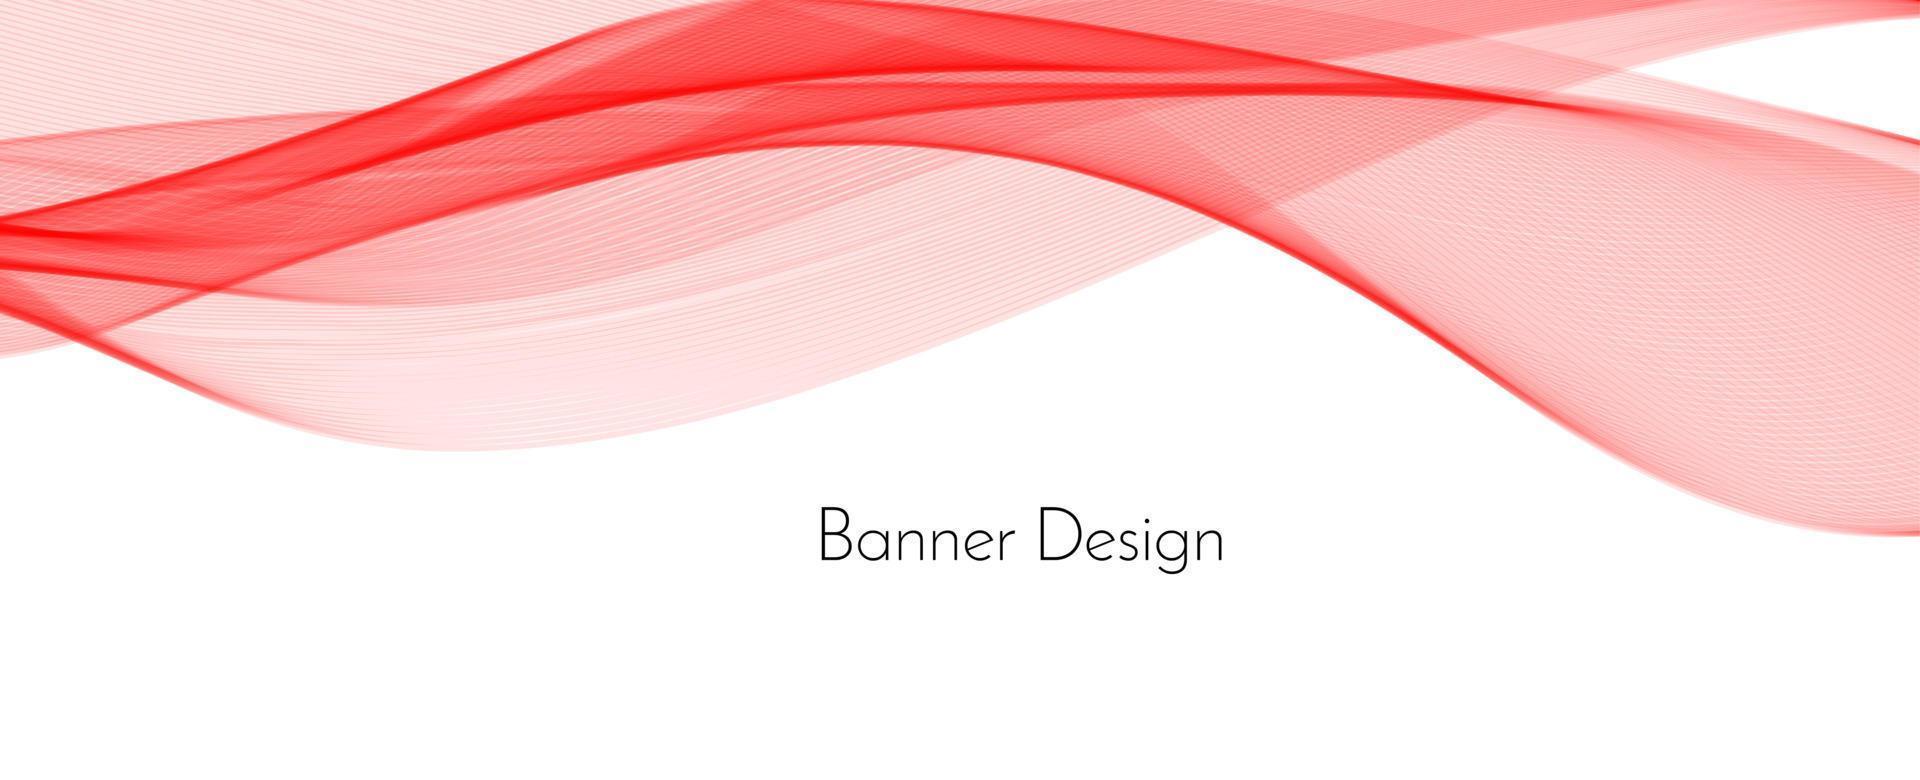 Fondo de banner de onda elegante decorativo moderno rojo abstracto vector